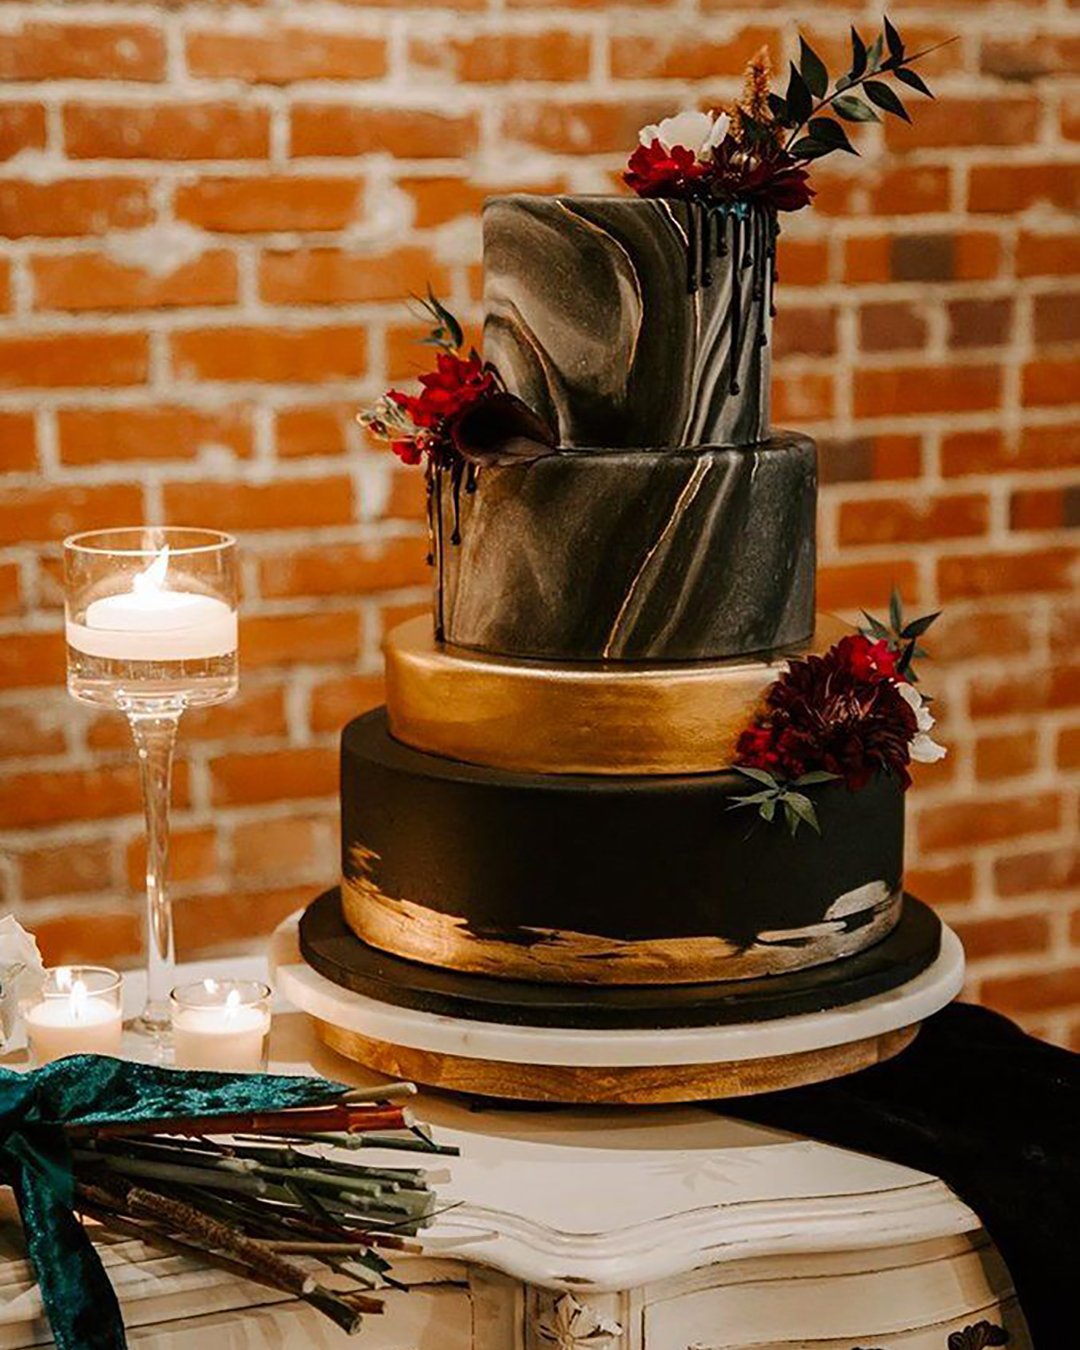 marble wedding cakes dark rustic cake appleheadphotographydesign